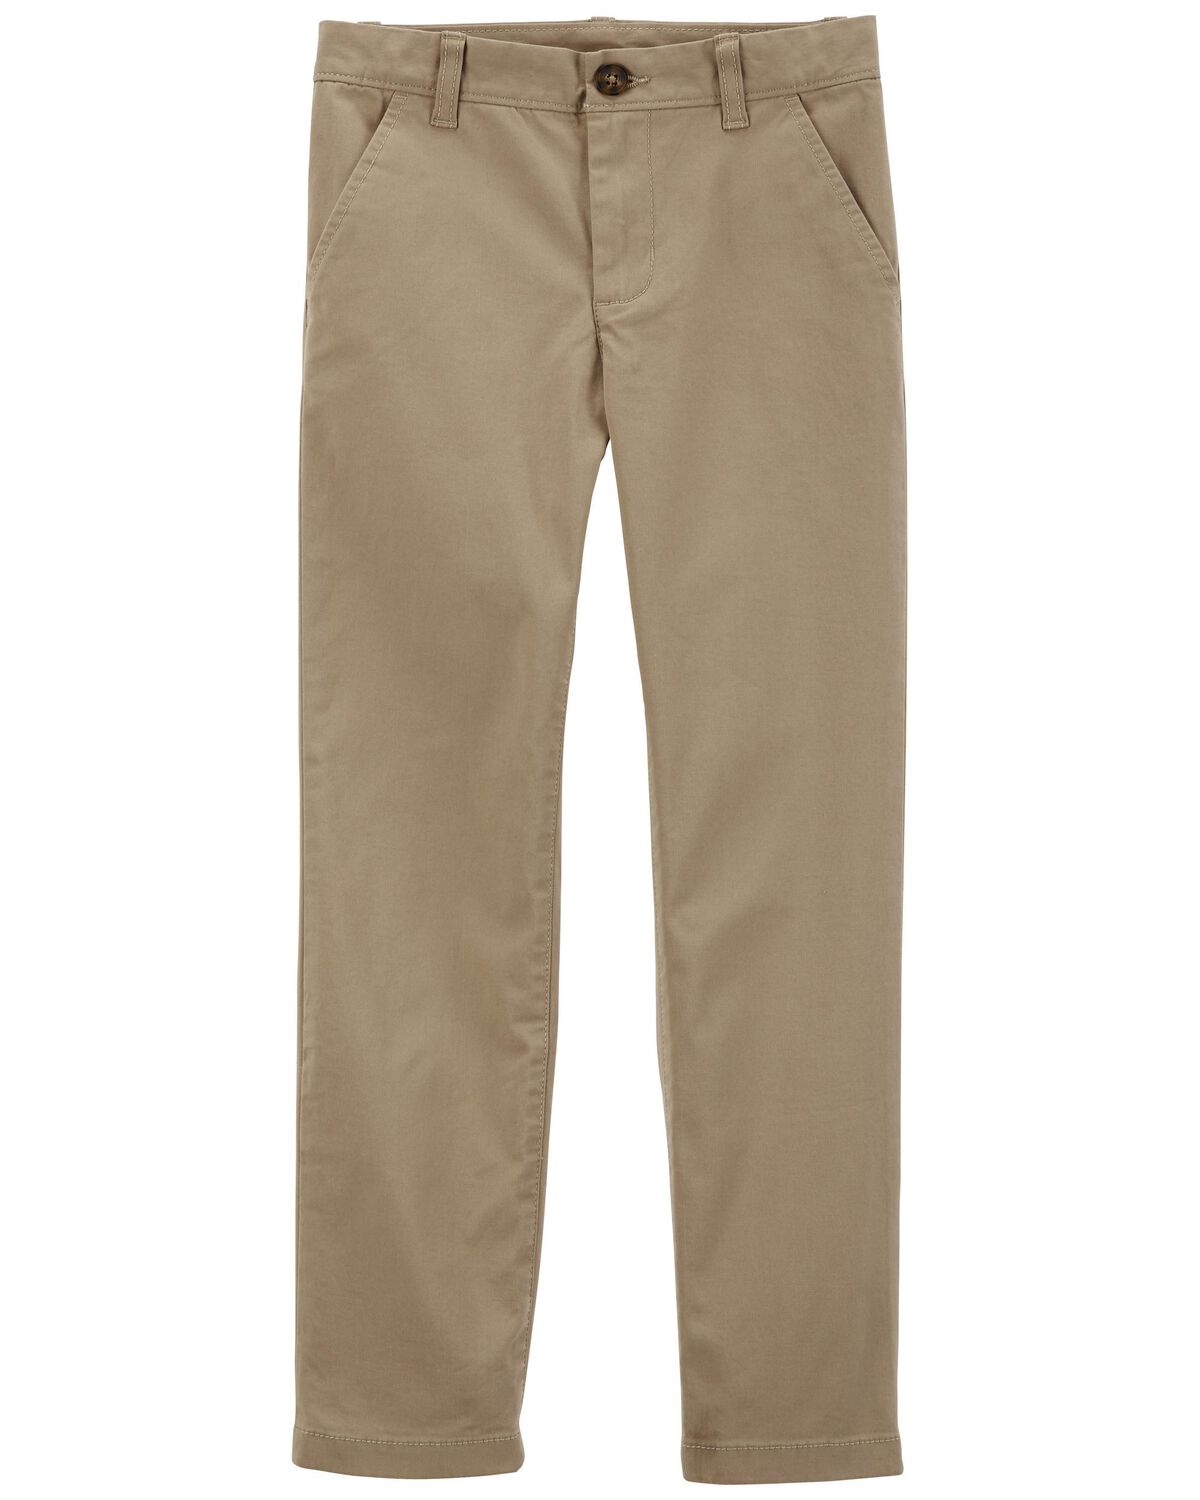 Khaki Kid Flat-Front Pants | carters.com